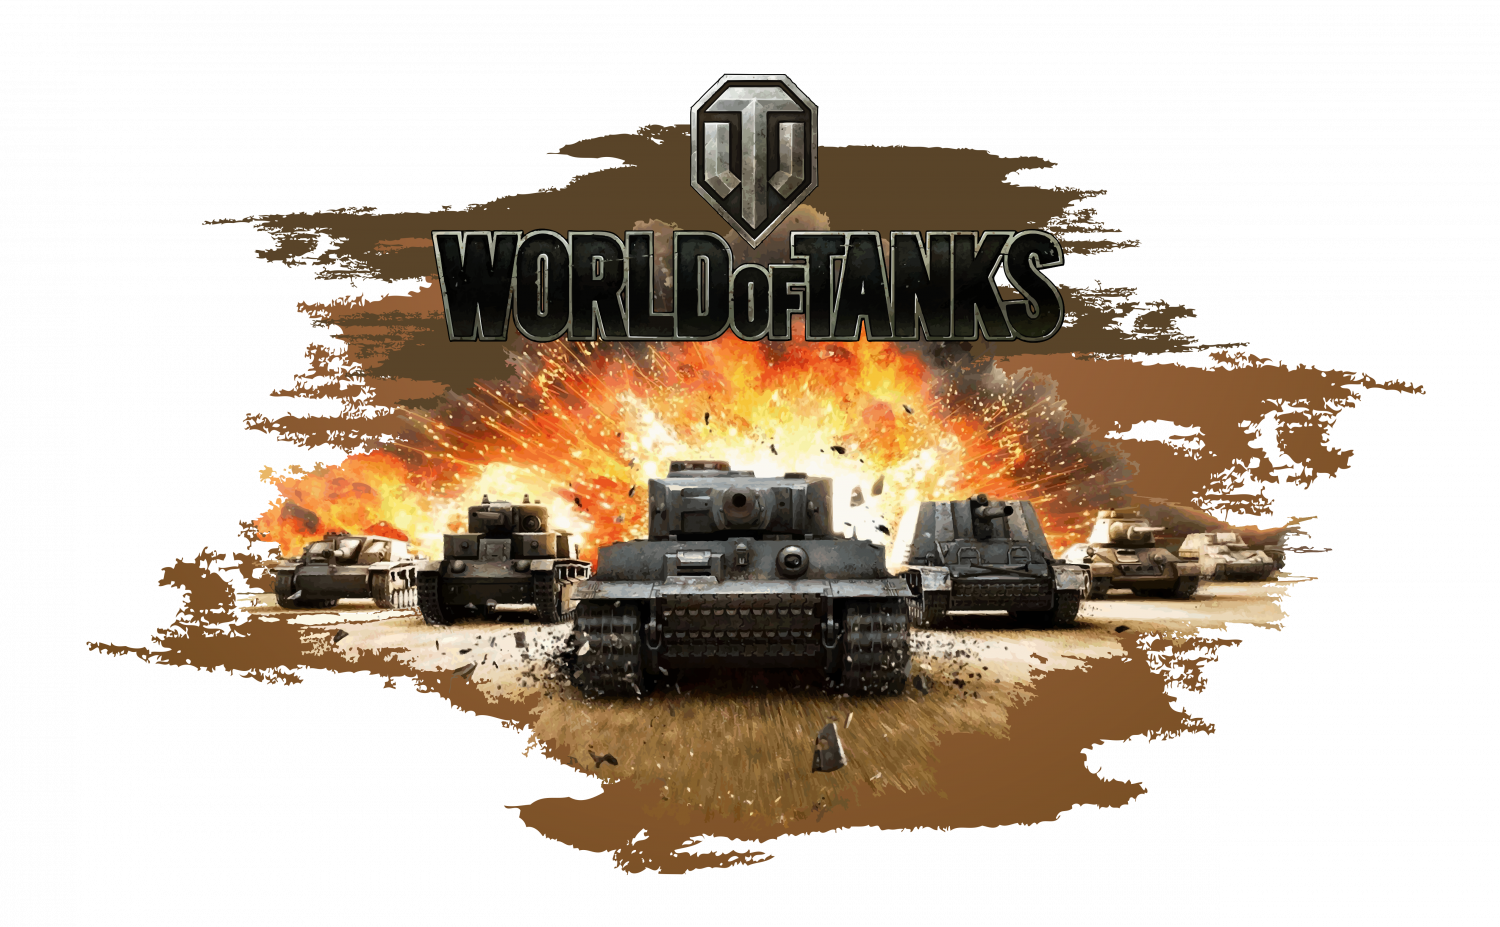 Worldoftanks exe. Танк ворлд оф танк вектор. World of Tanks логотип. World of Tanks надпись. Надписи для танков.